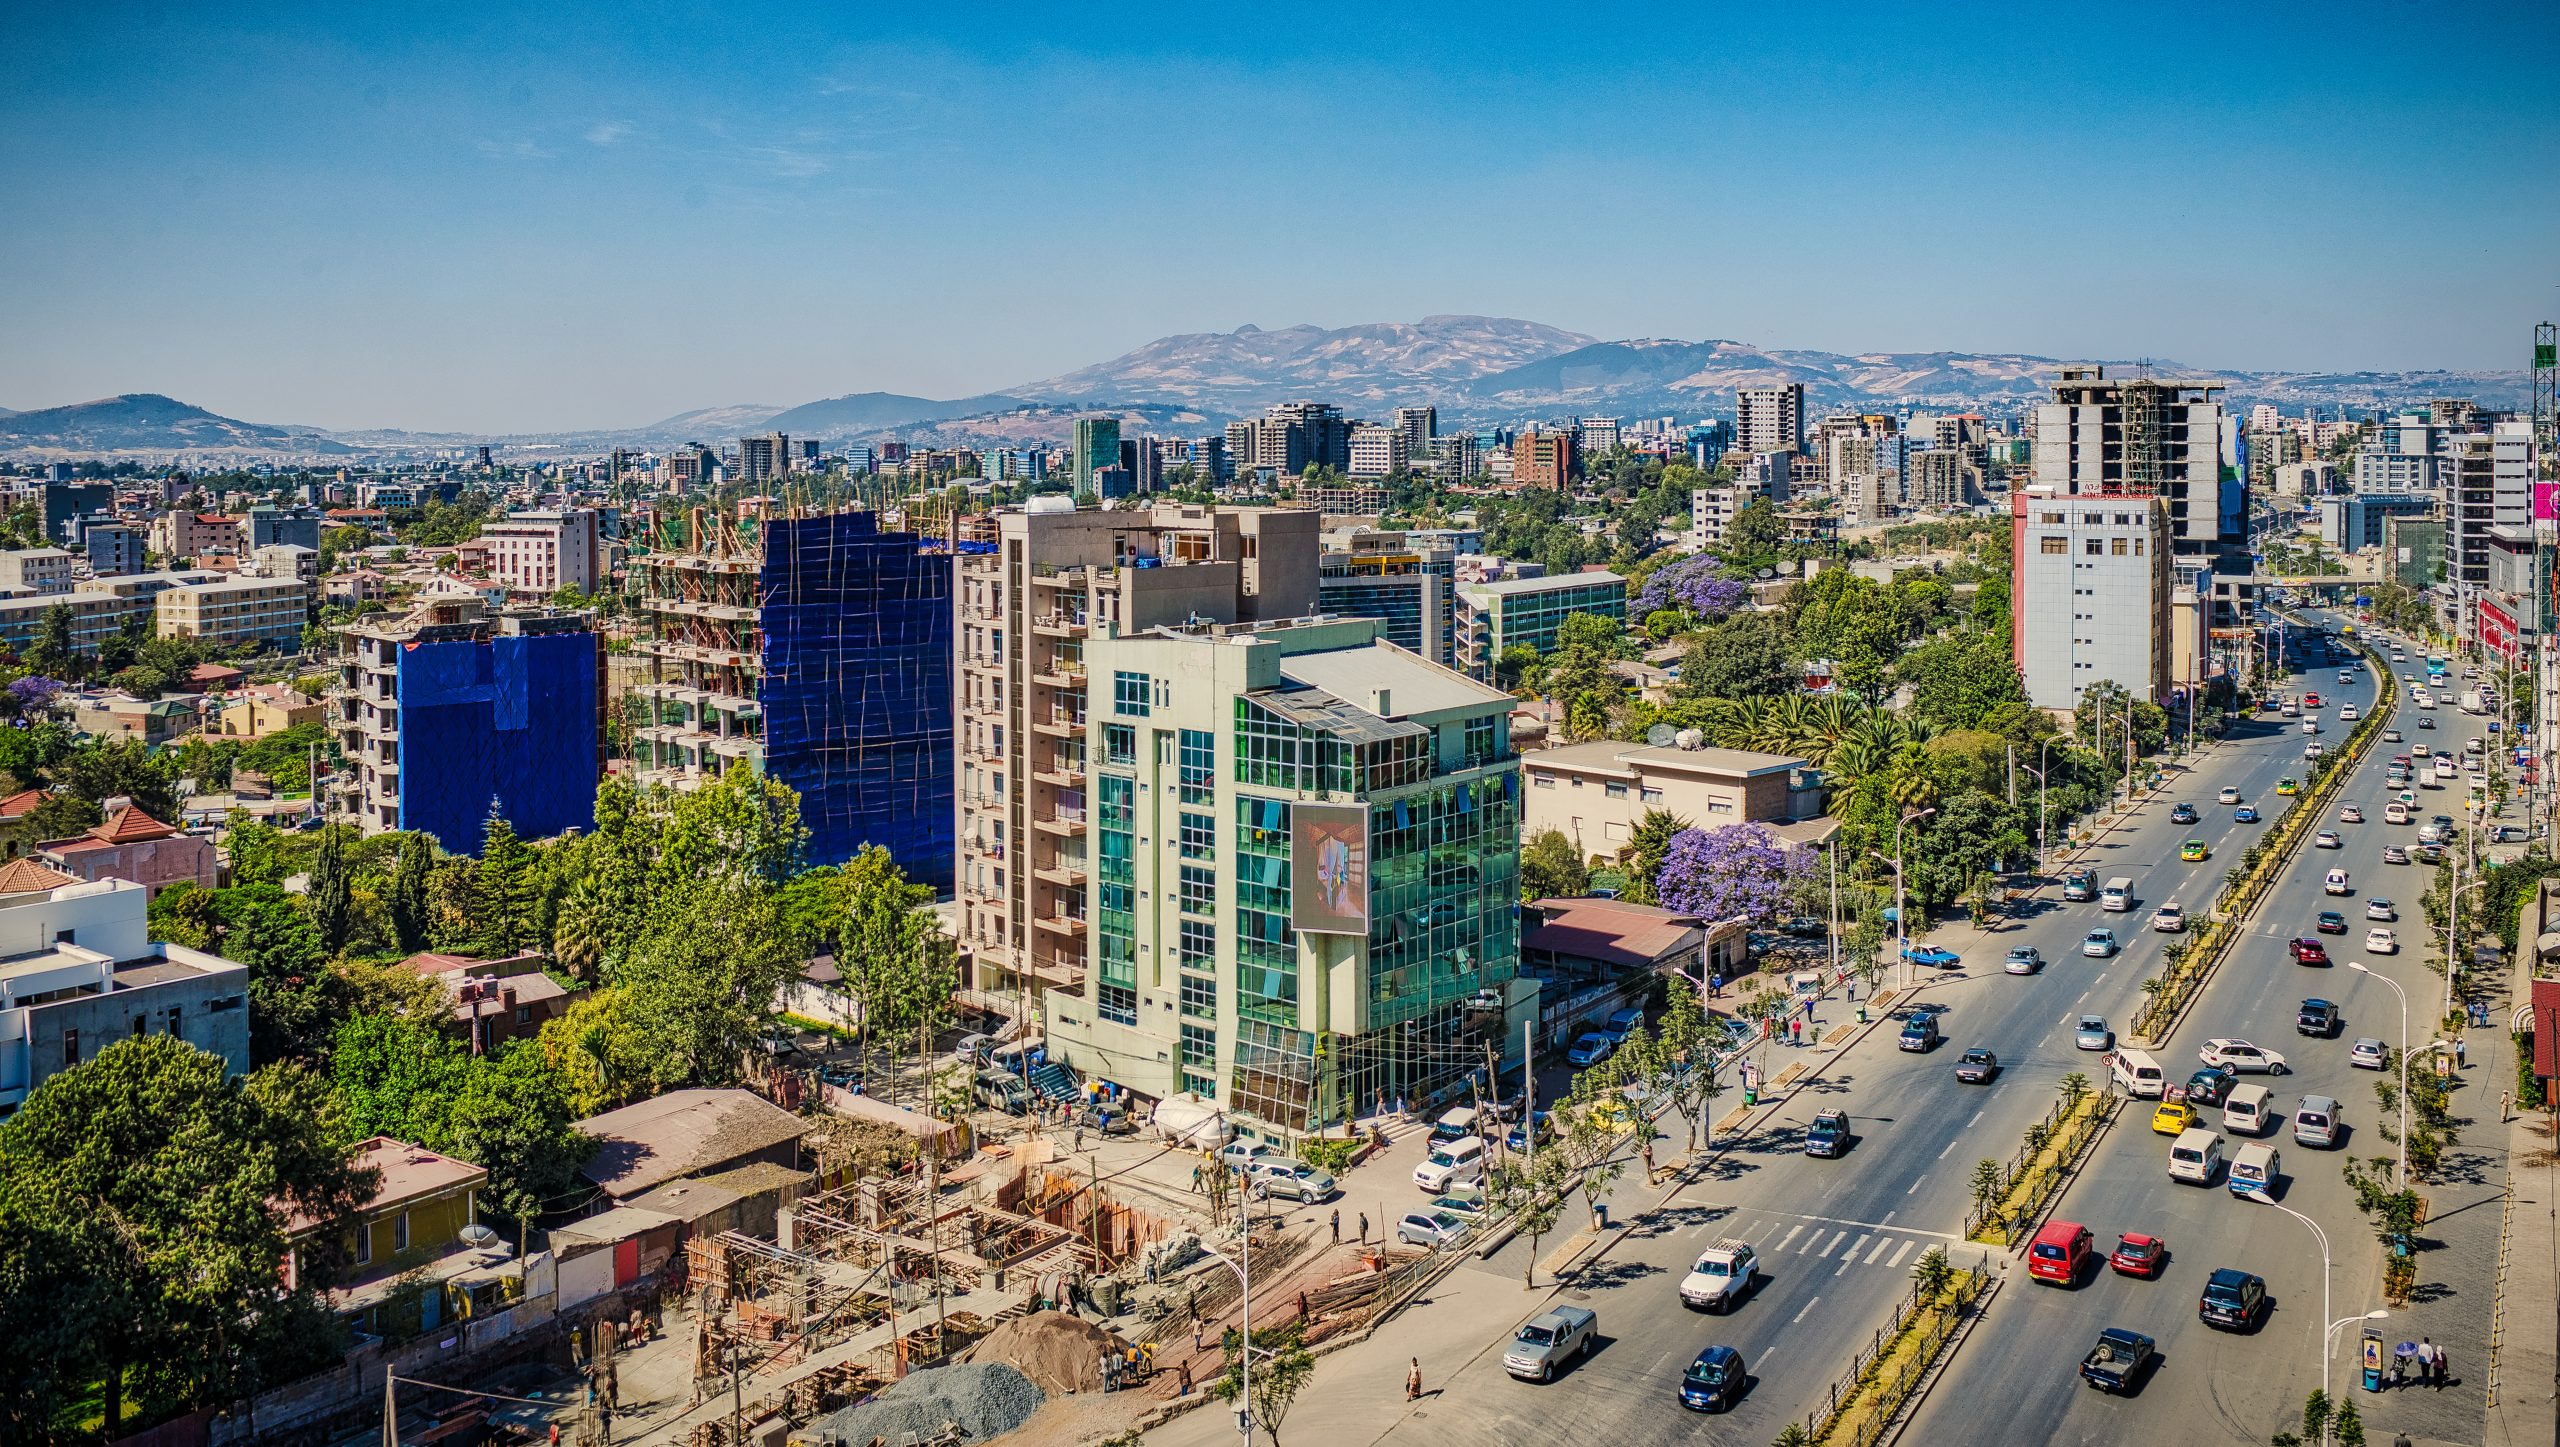 Panoramic view of Addis Ababa, Ethiopia